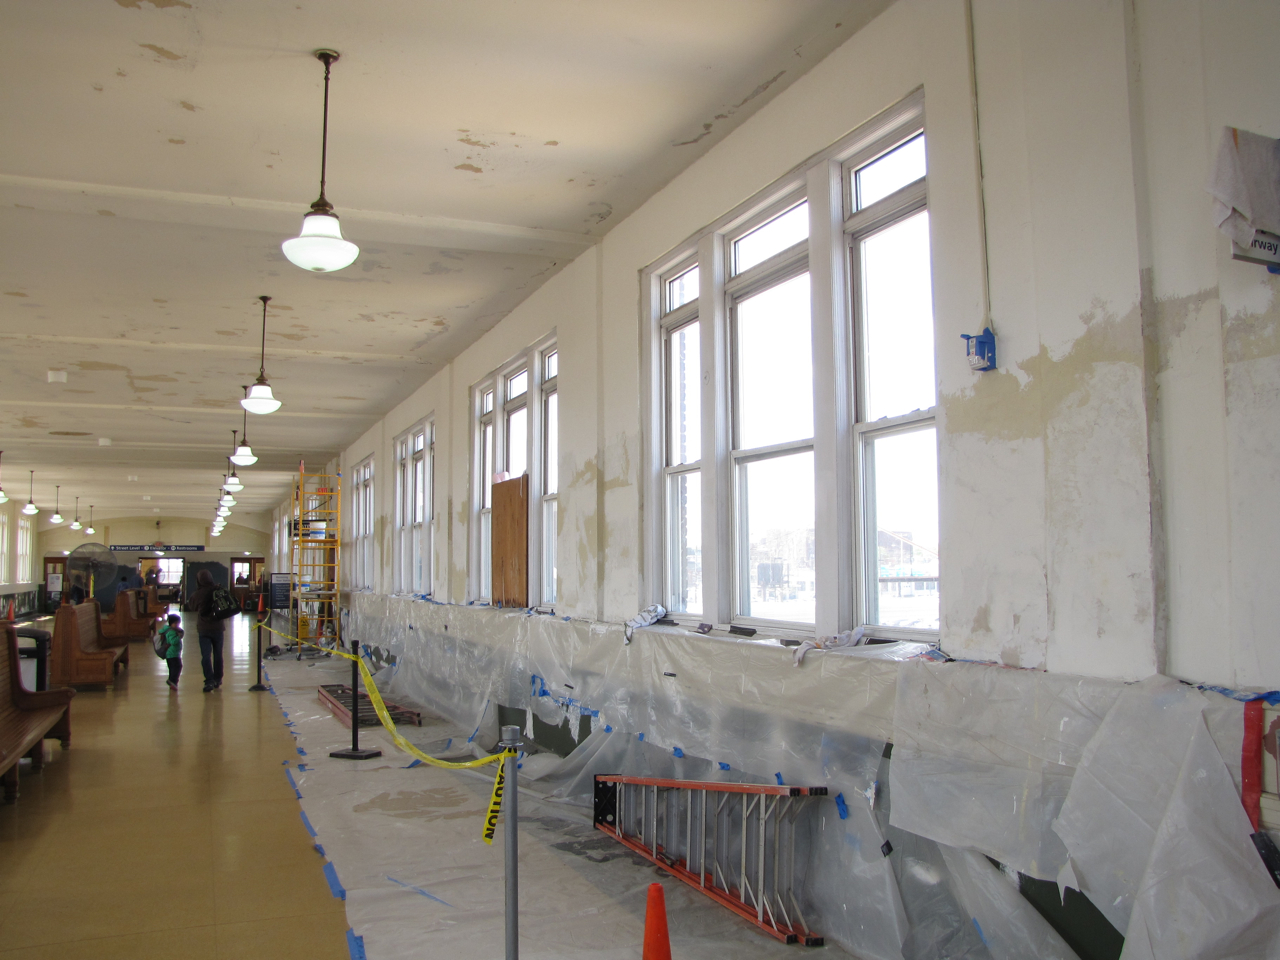 Amtrak station renovation